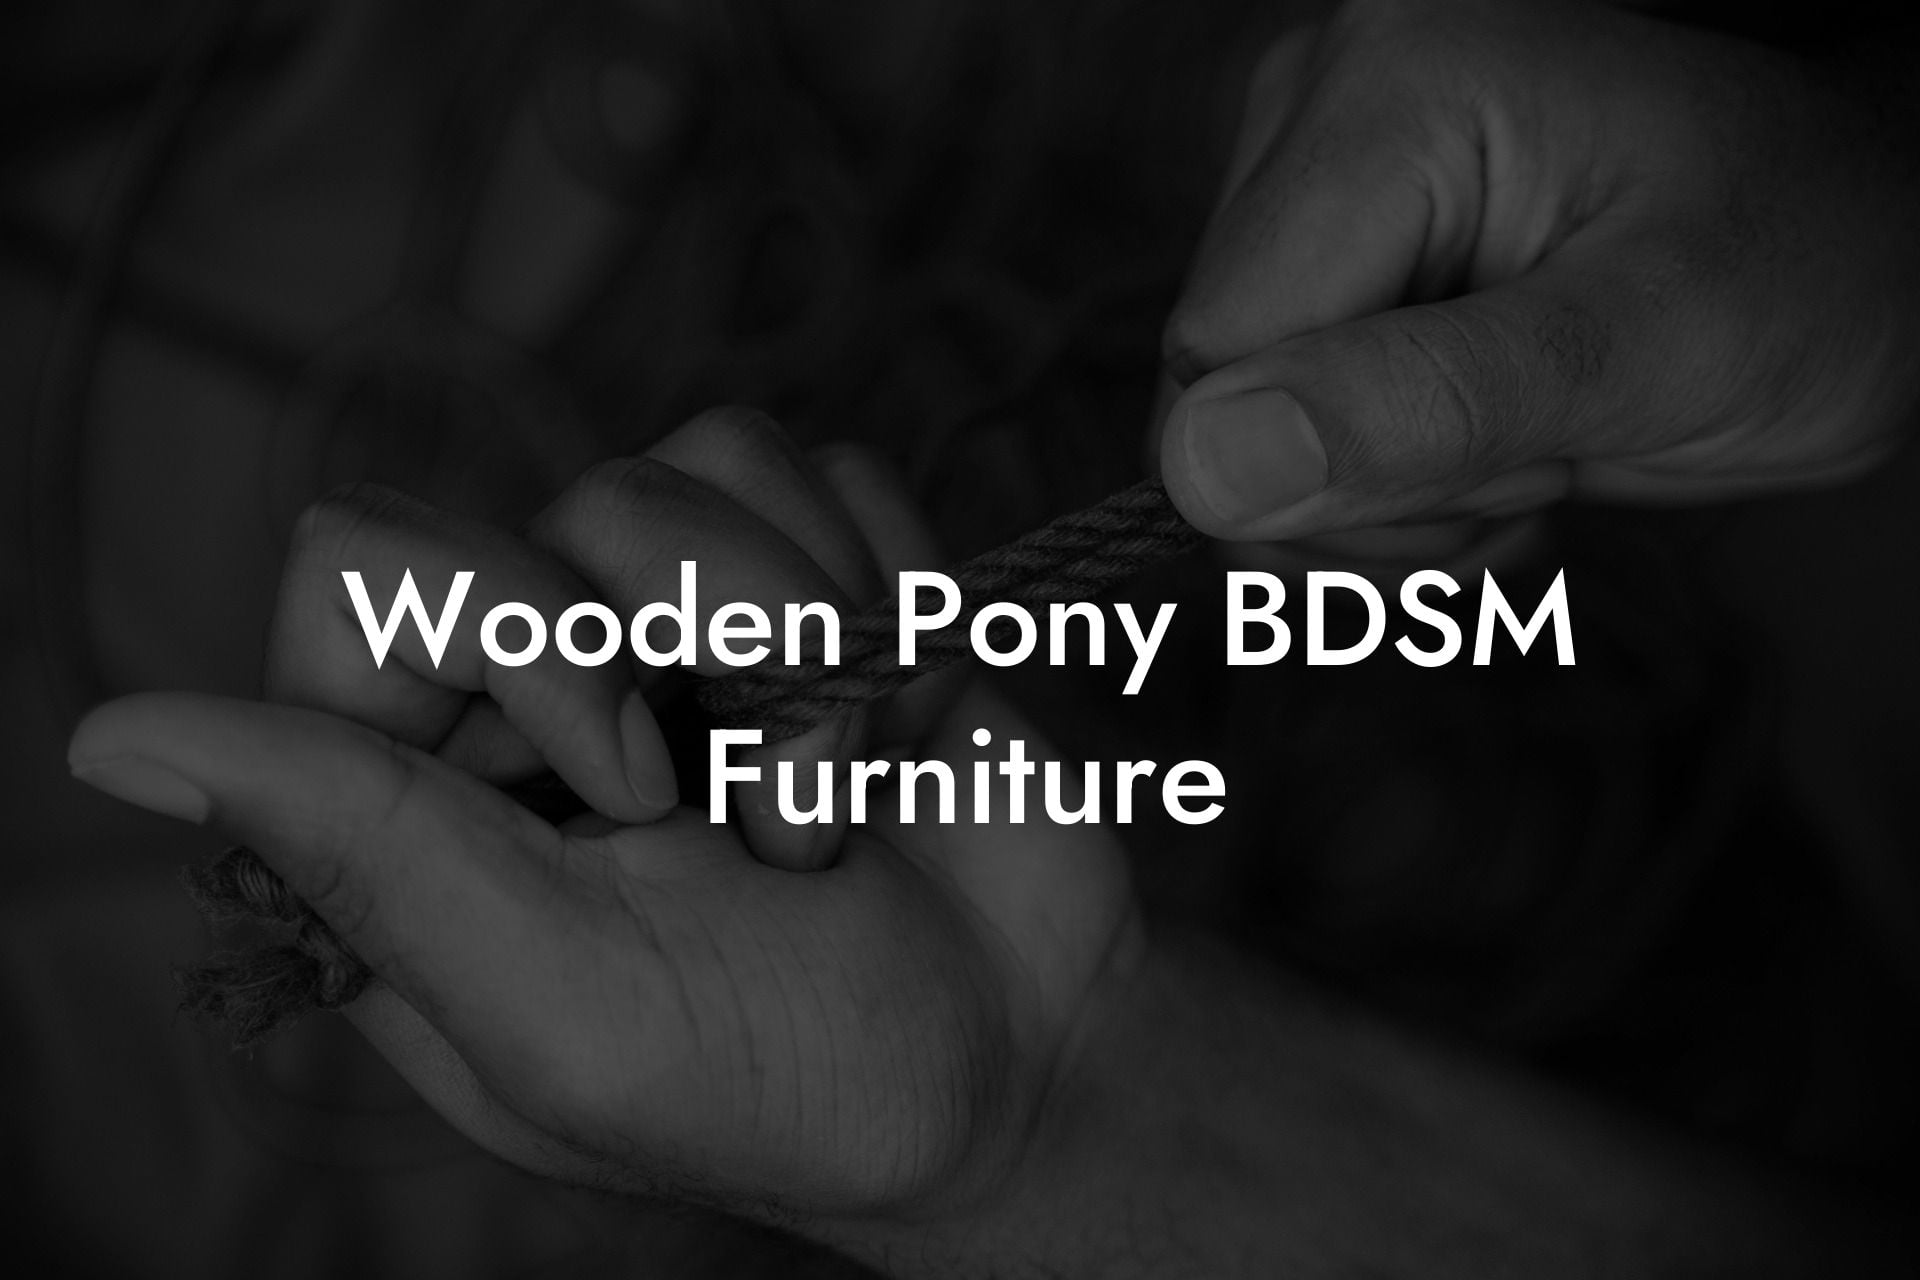 Wooden Pony BDSM Furniture